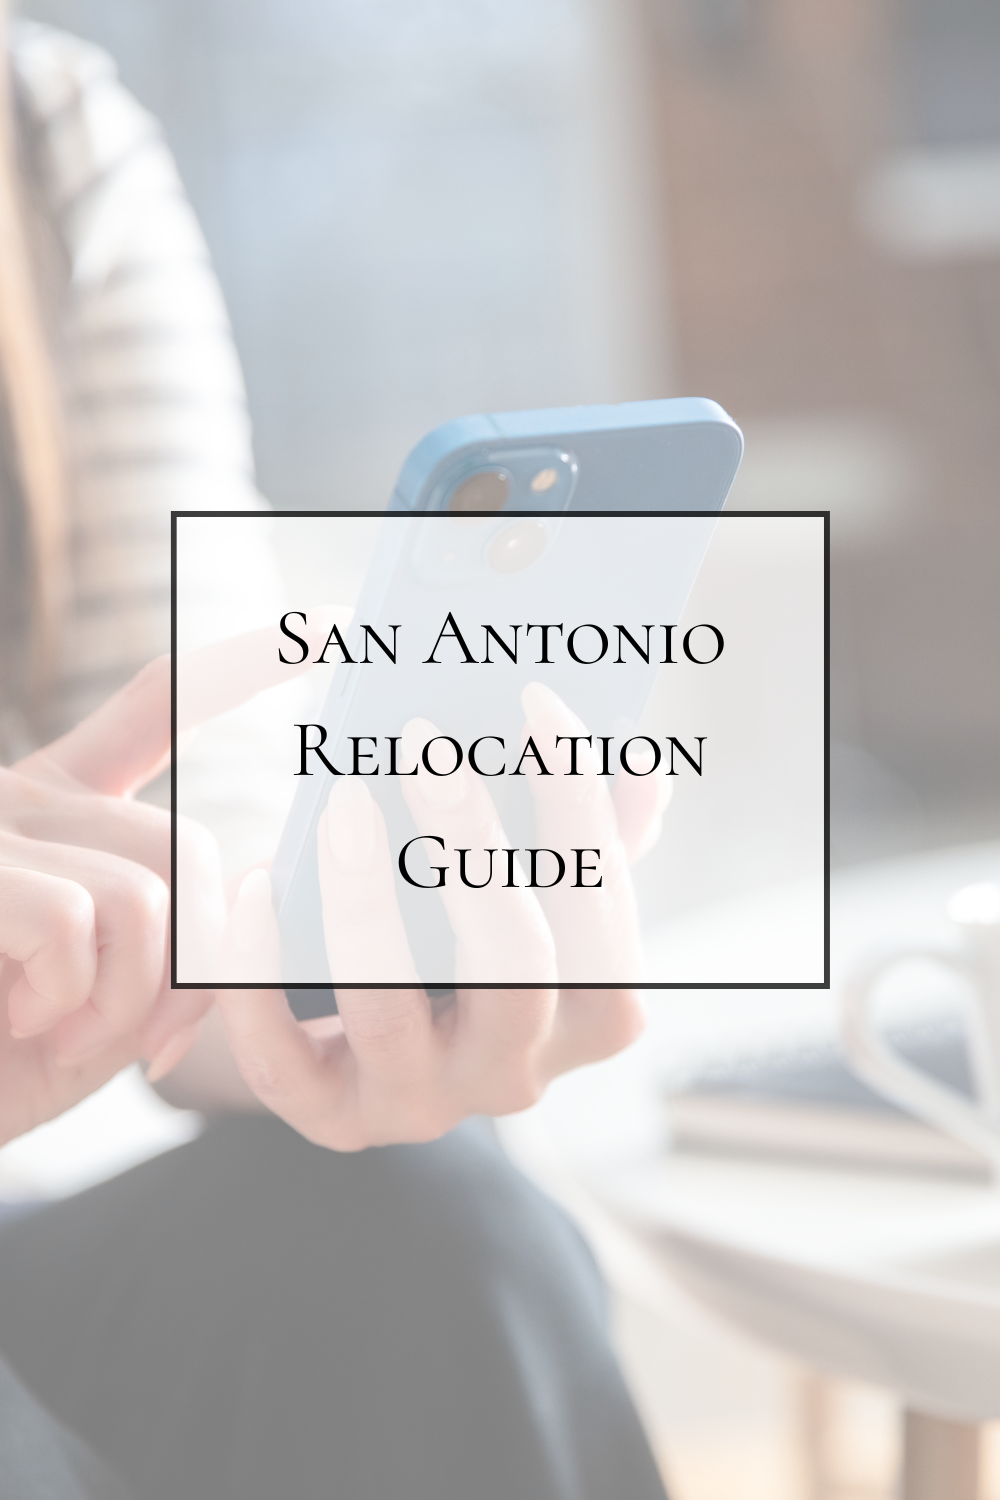 San antonio relocation guide, Tammy Dominguez - San Antonio realtor & relocation specialist